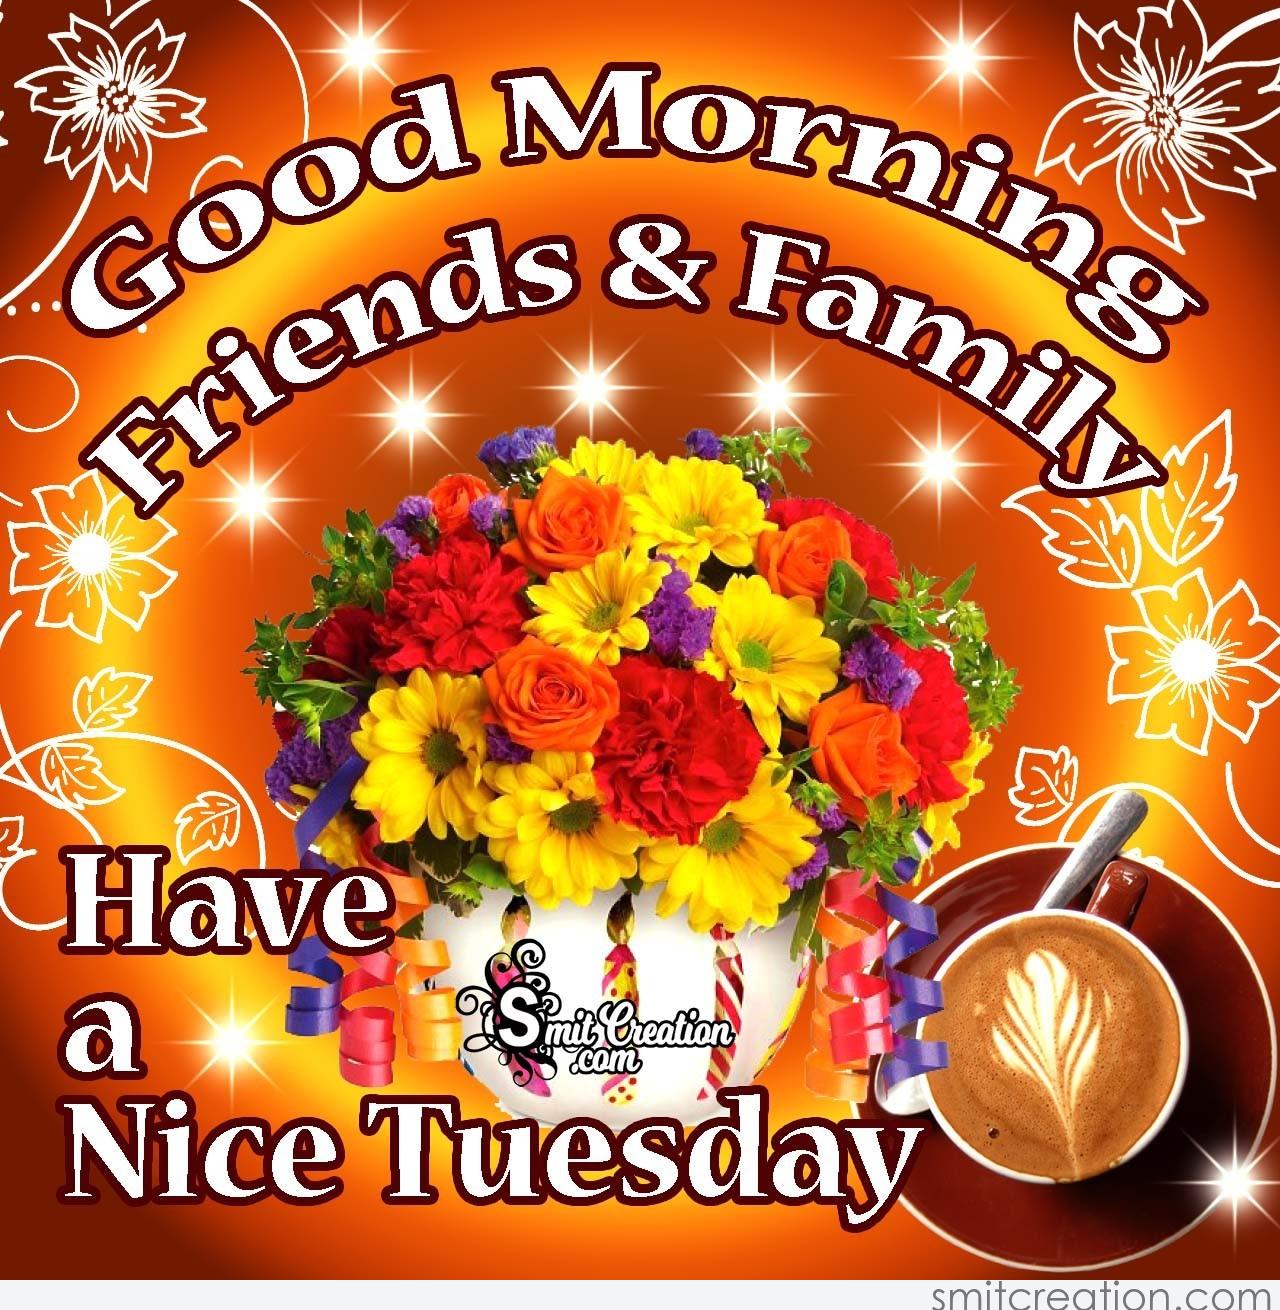 Good Morning Friends & Family Have A Nice Tuesday - SmitCreation.com